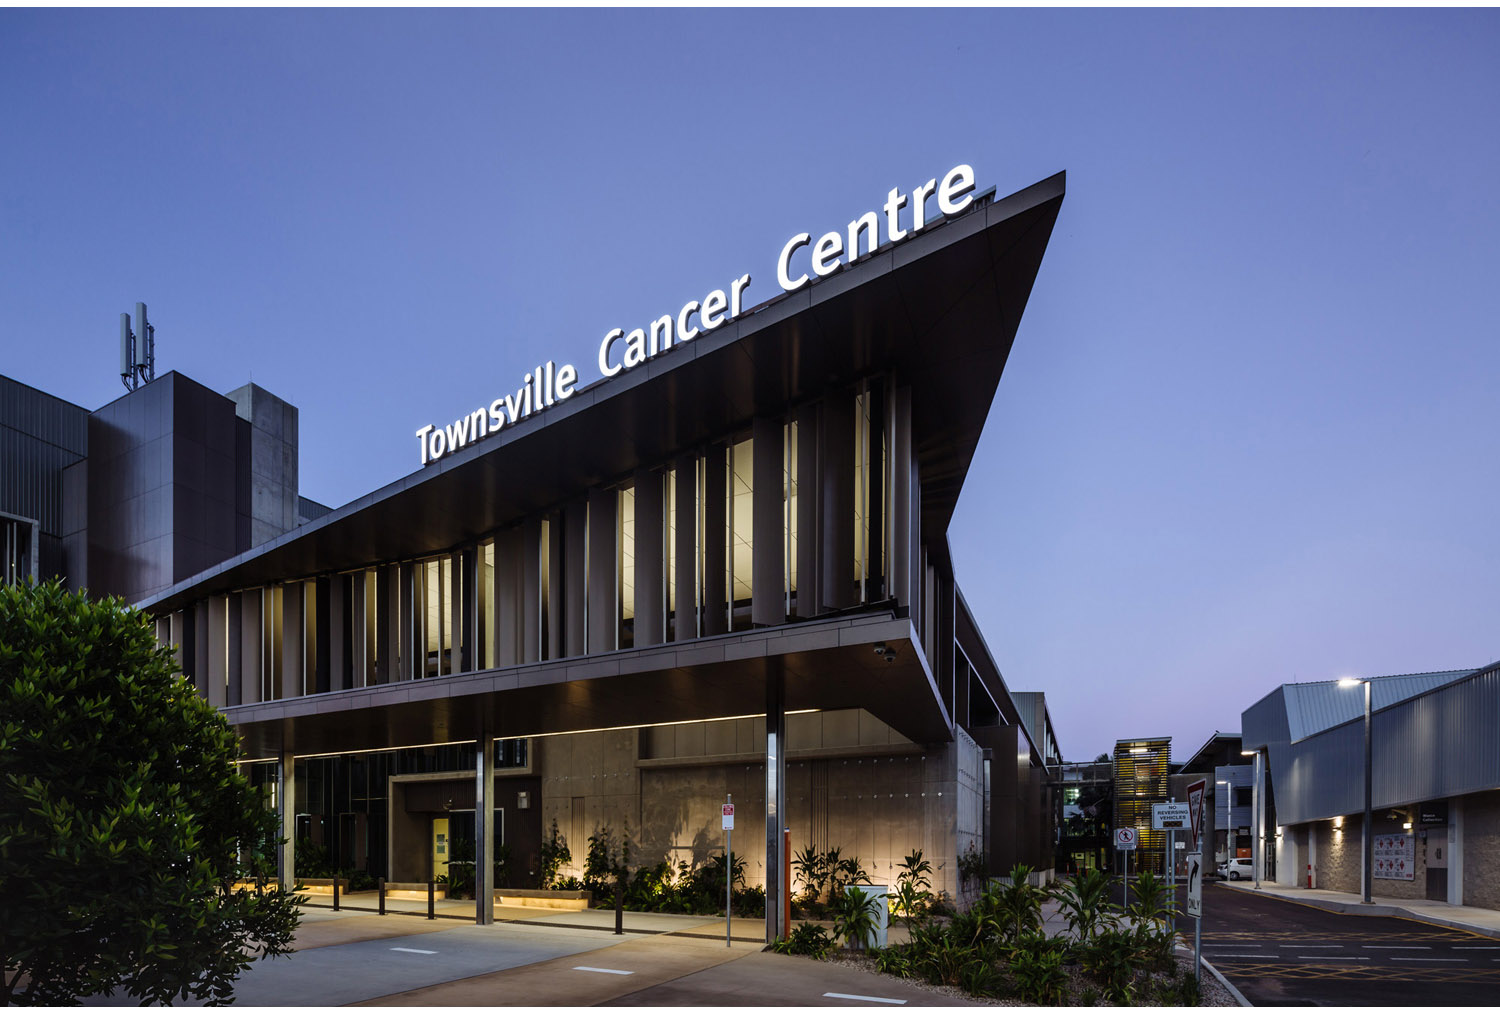 Townsville-Cancer-Centre.01.jpg